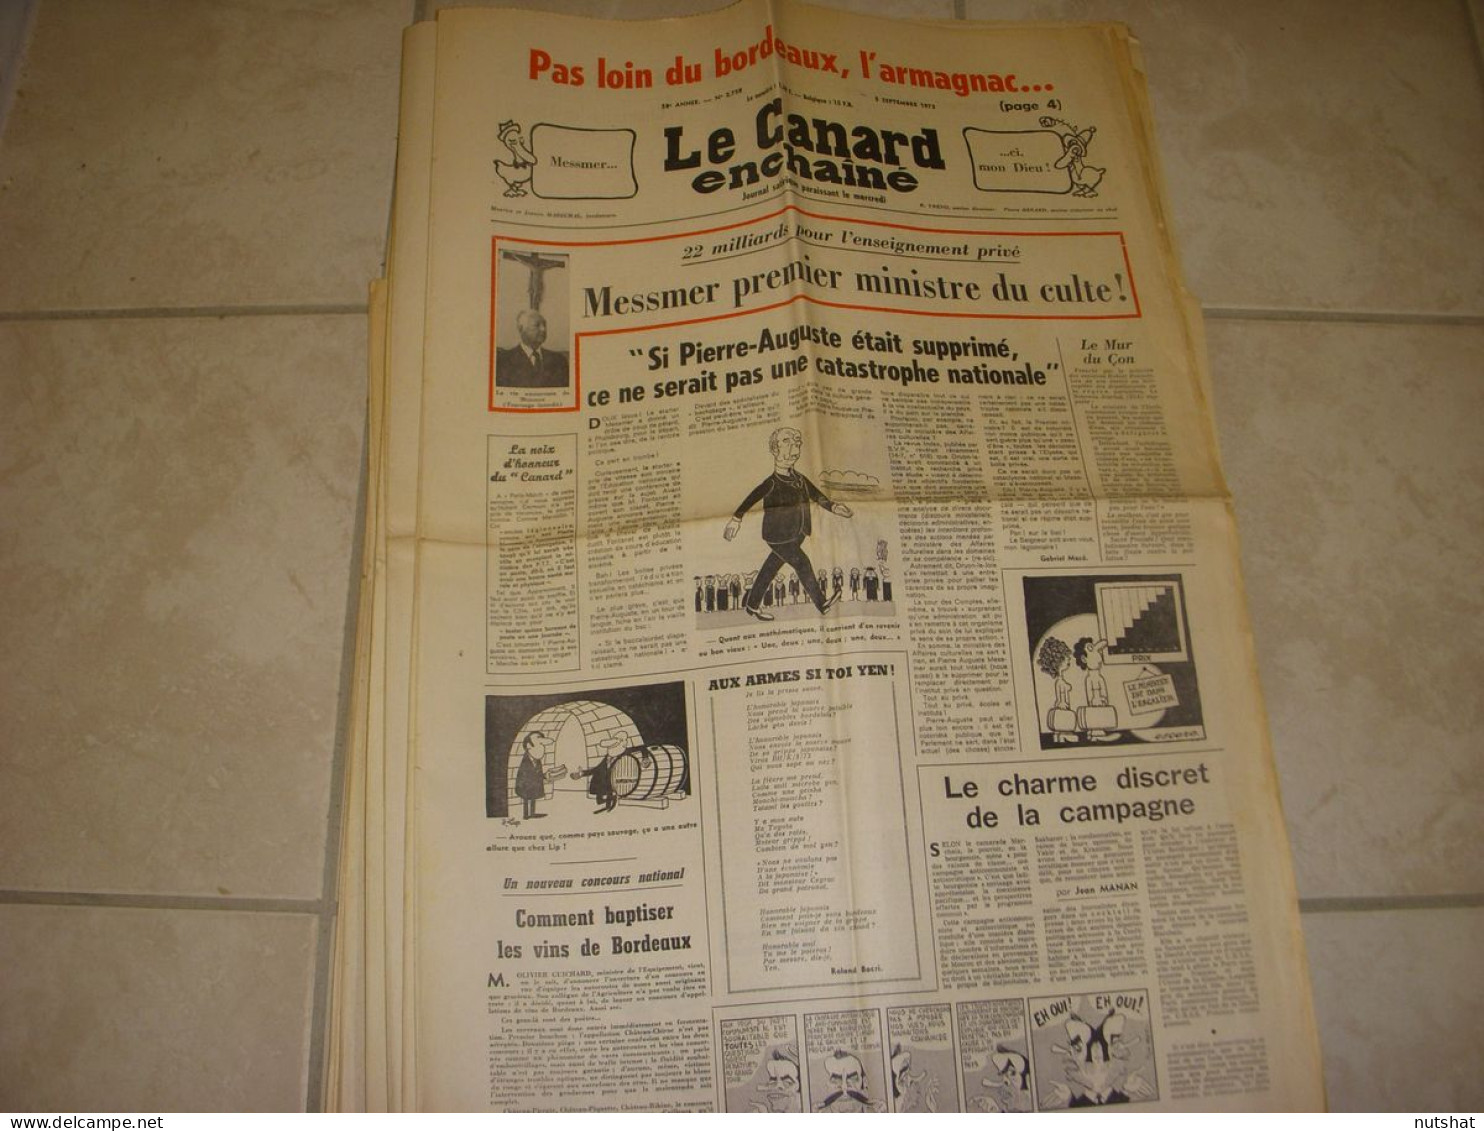 CANARD ENCHAINE 2758 05.09.1973 Le MLF Michel POLAC Benigno CACERES Guy LUX - Política